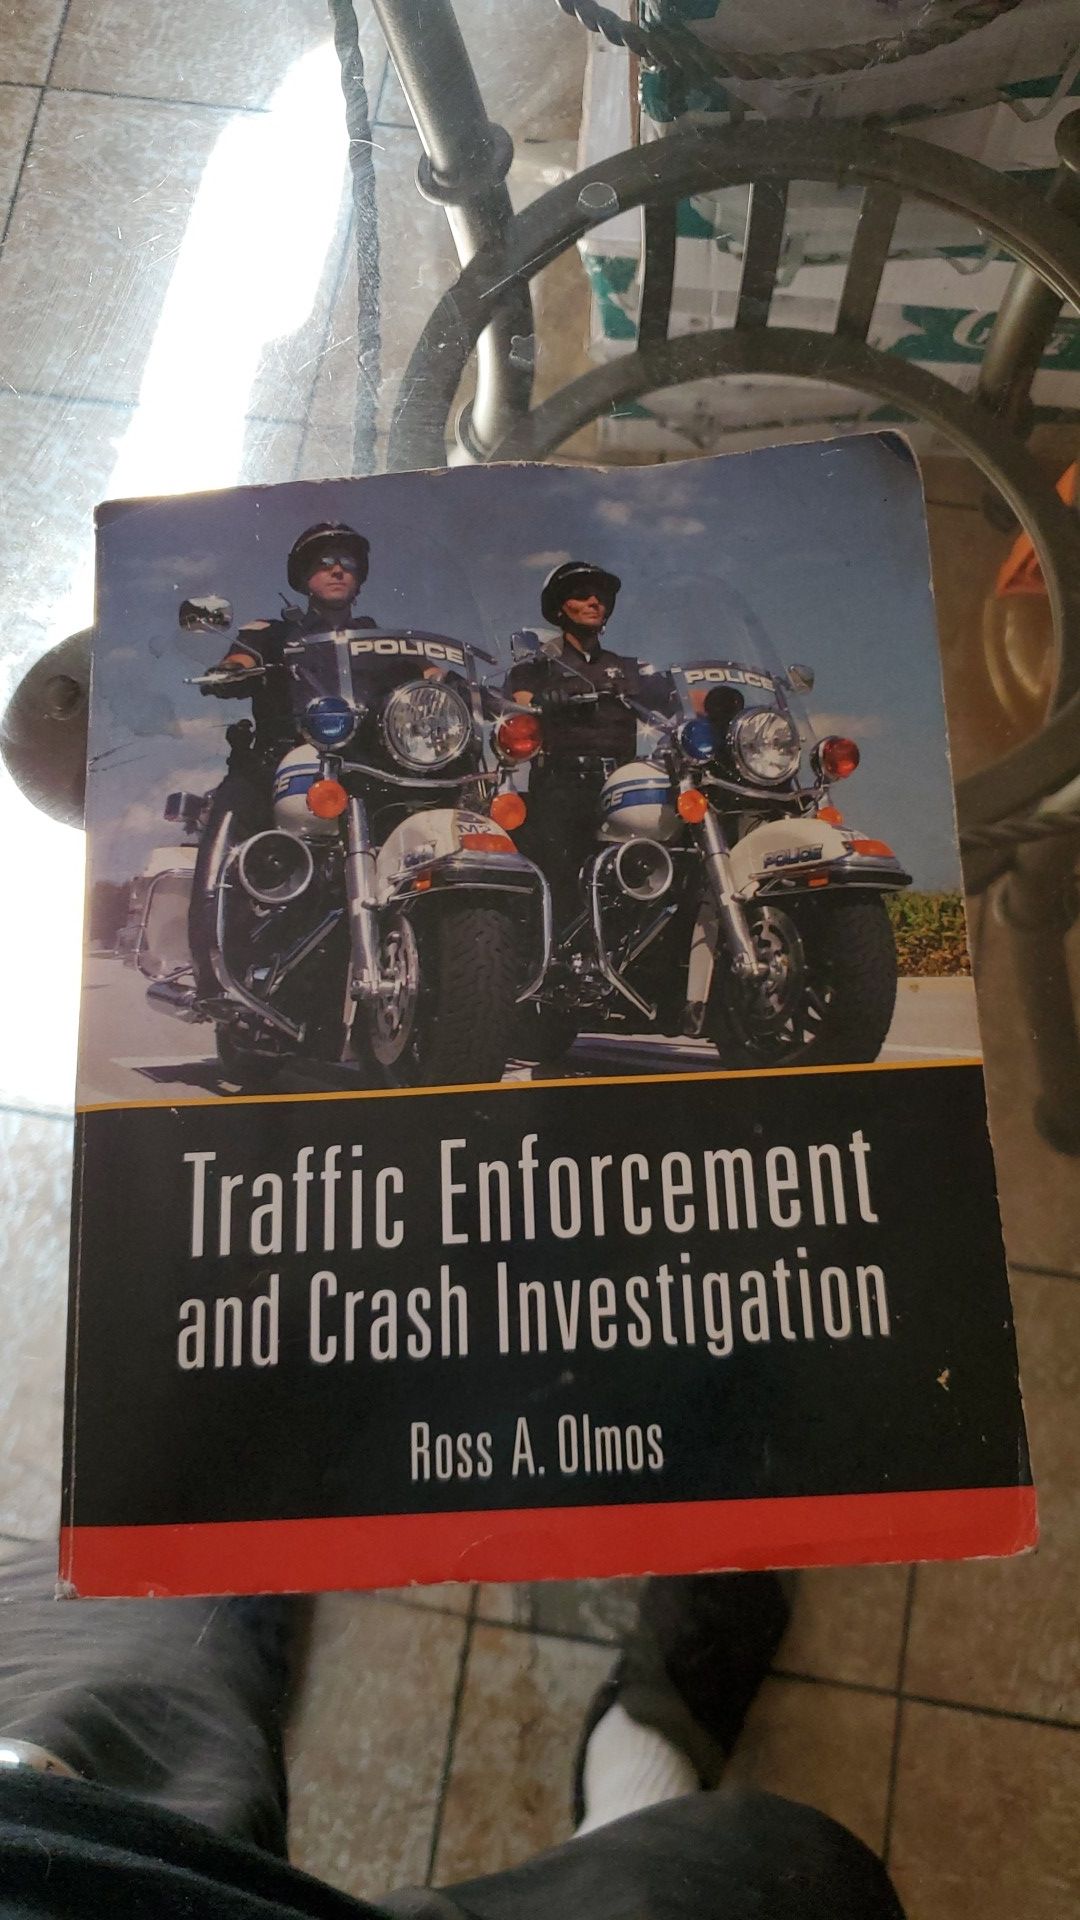 Traffic enforcement and crash investigations